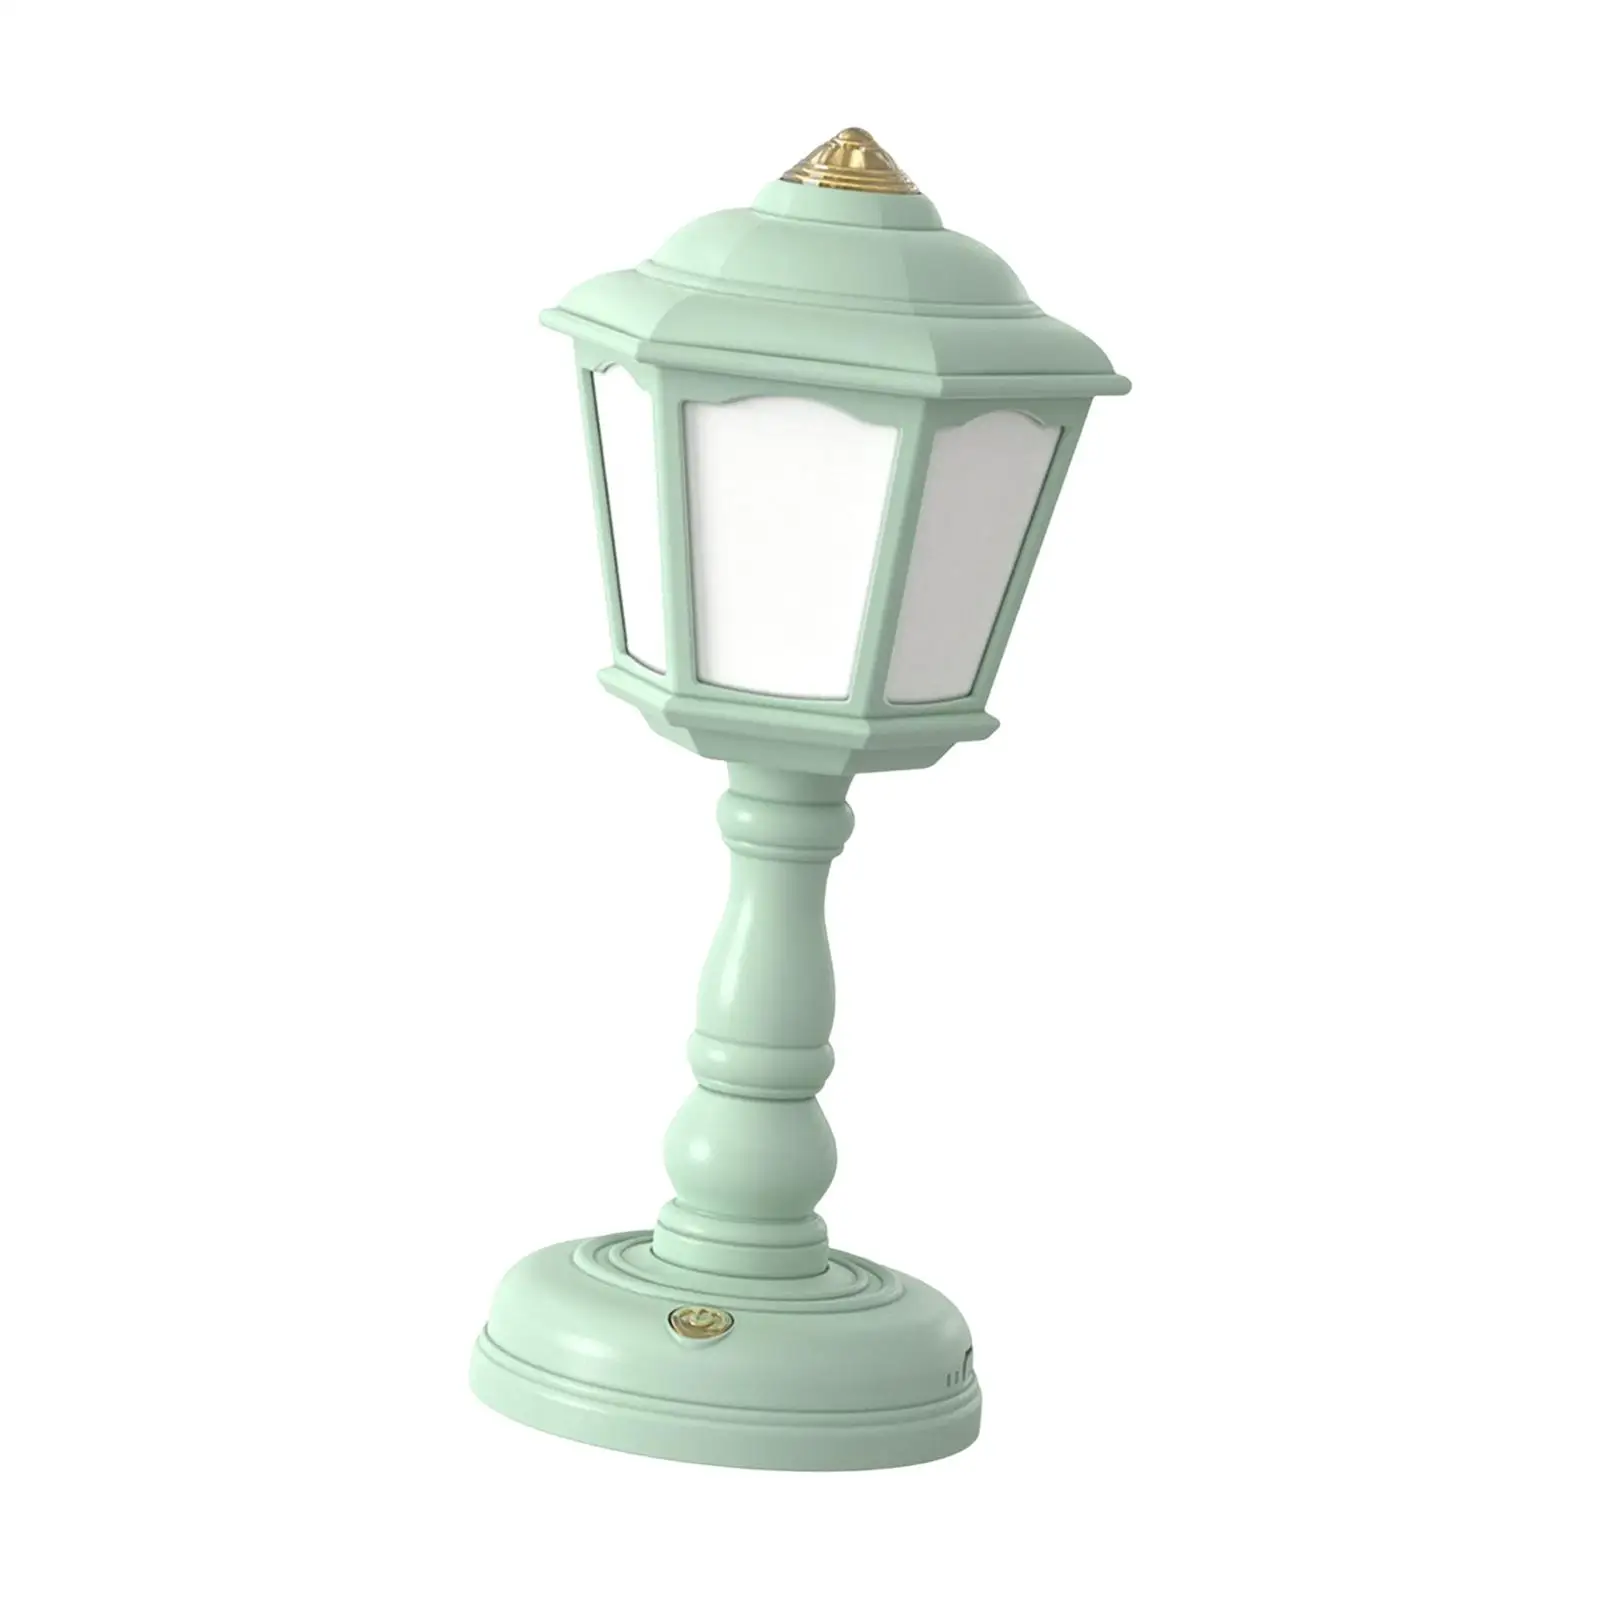 Mini Retro Table Lamp Decorative LED Night Light for Bedroom Bedside Dorm